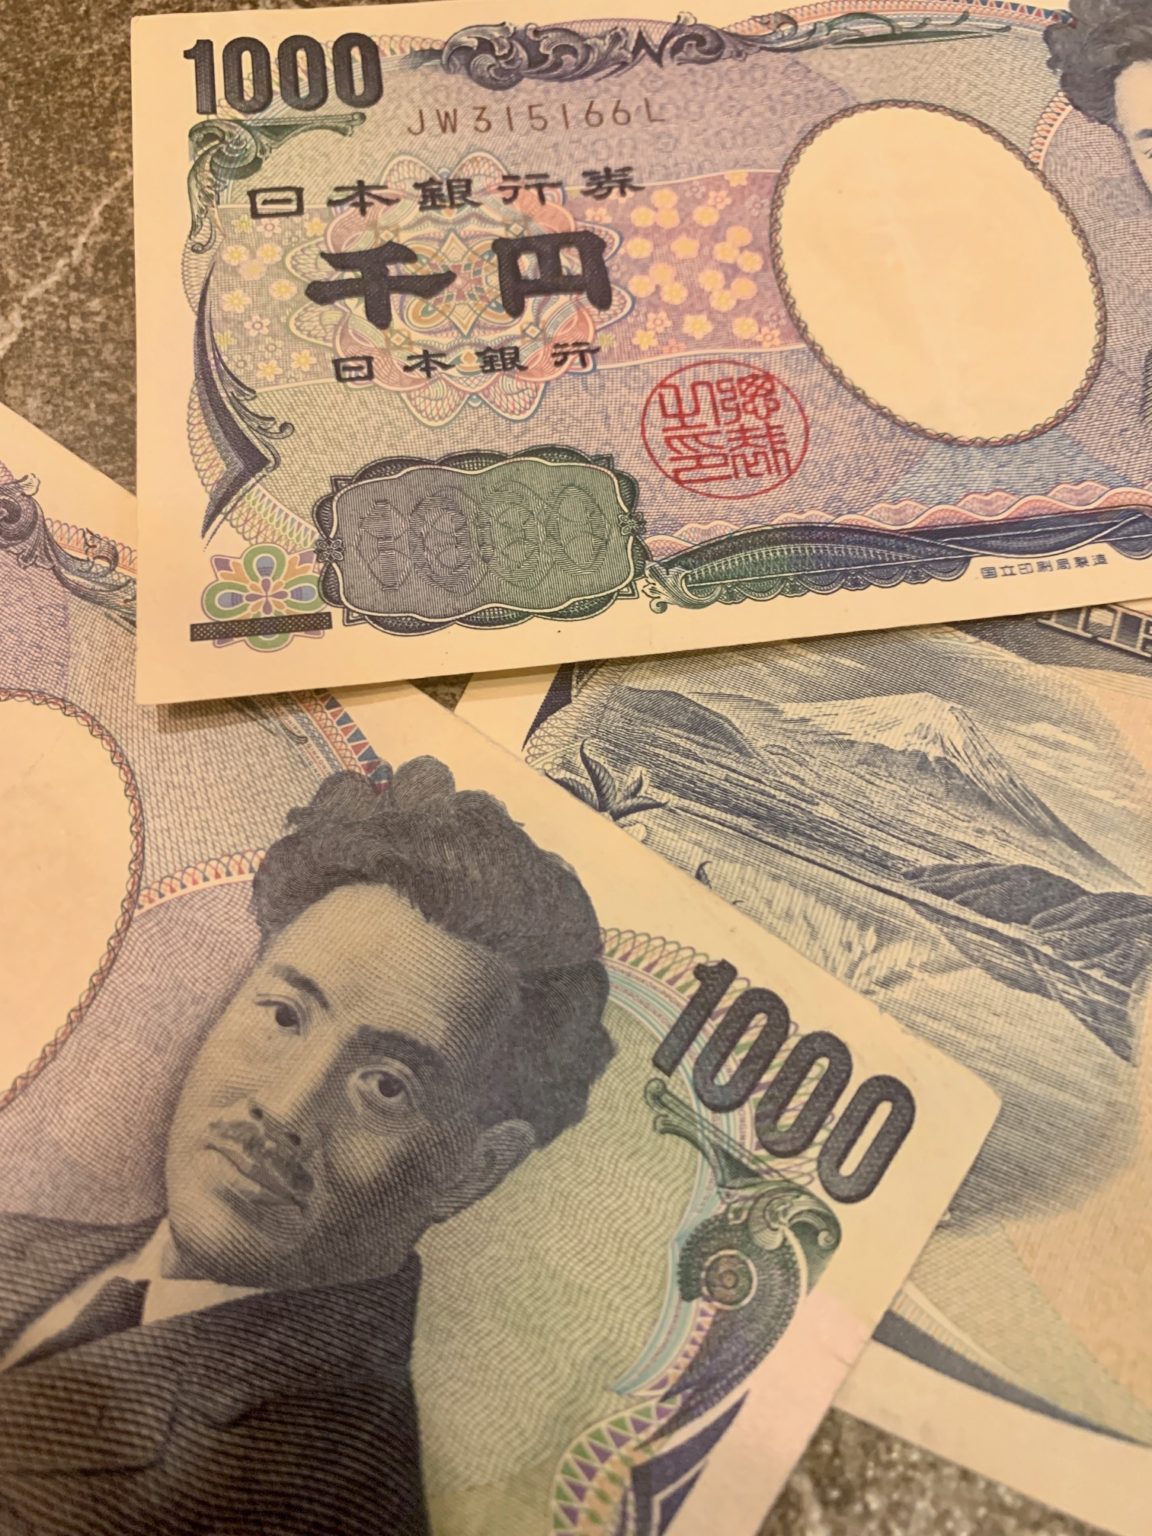 ¥1000 (Japanese Yen) bills feature Mount Fuji!